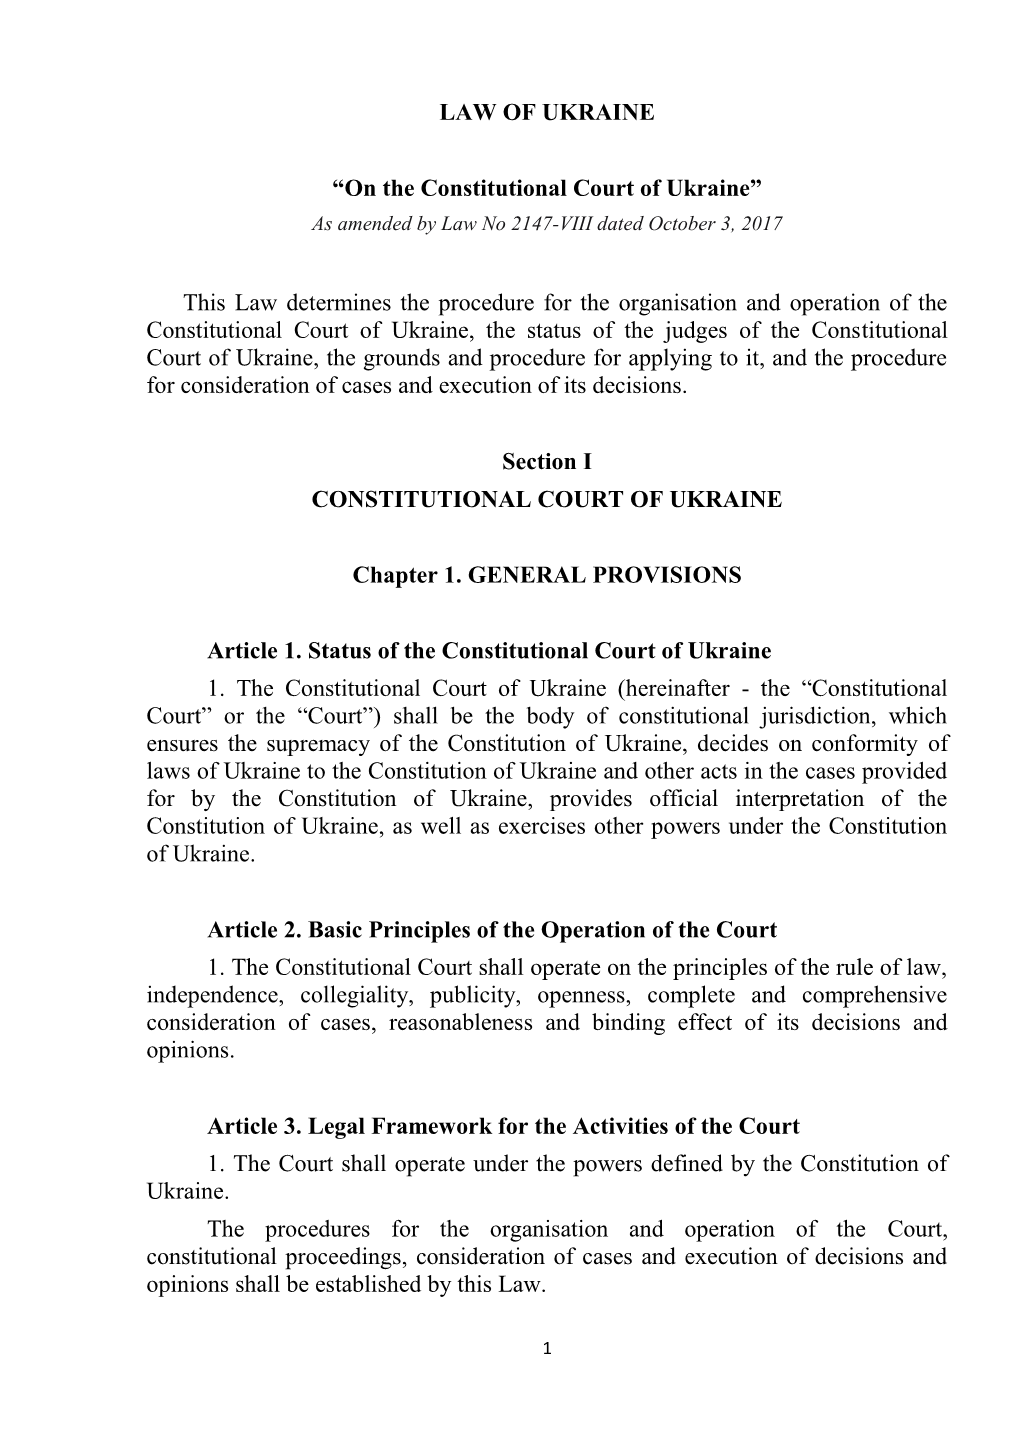 Law of Ukraine on the Constitutional Court of Ukraine